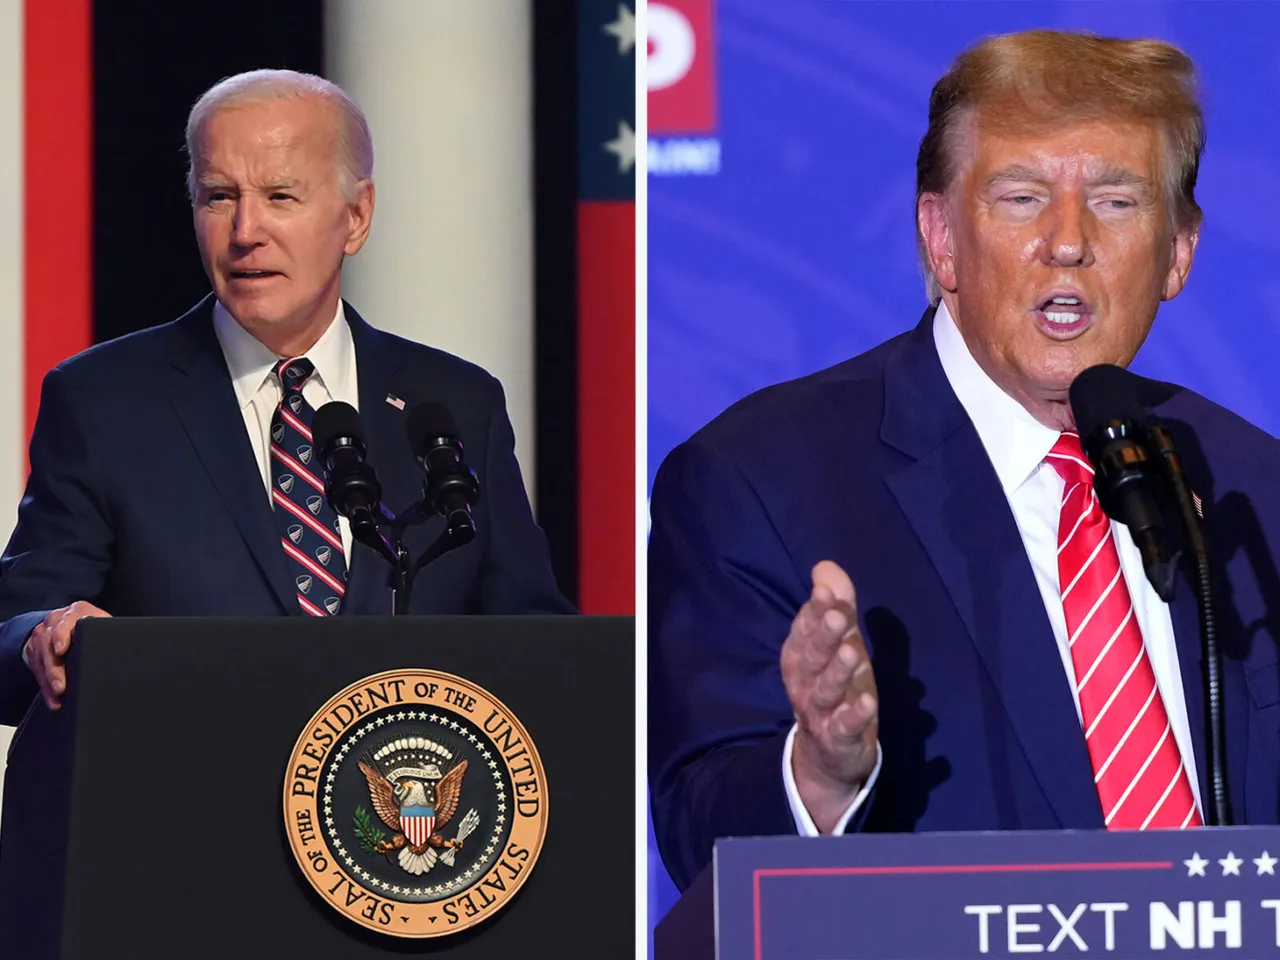 Biden criticizes former President Donald Trump's late-night social media habits